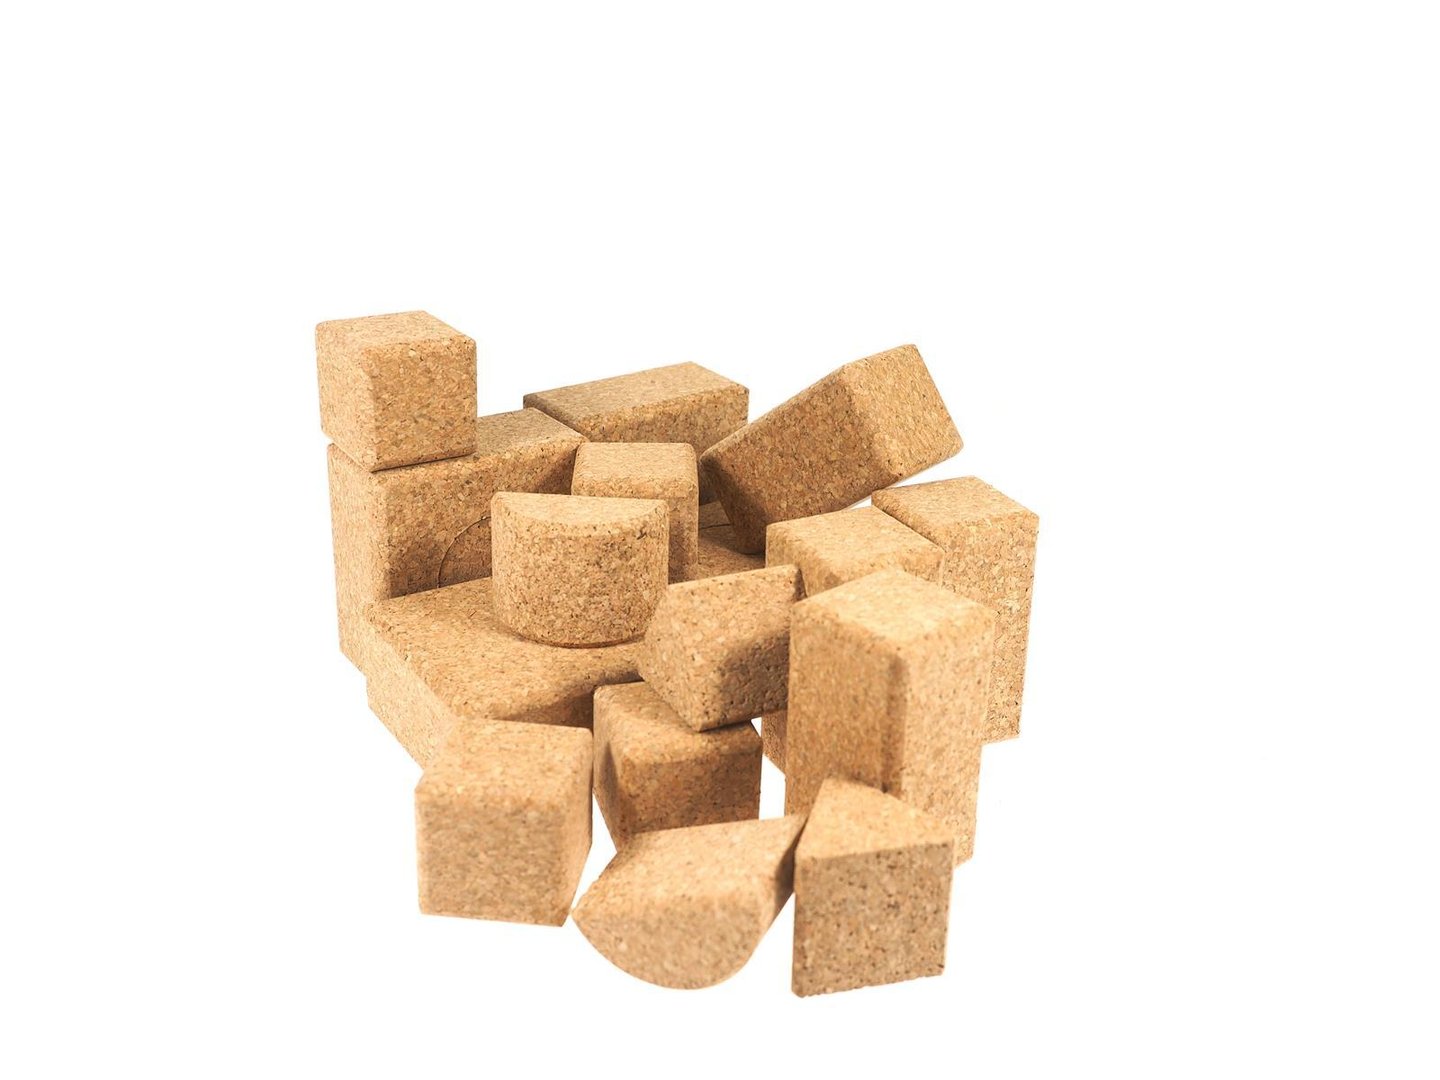 7016 2 Building blocks in set cork 2